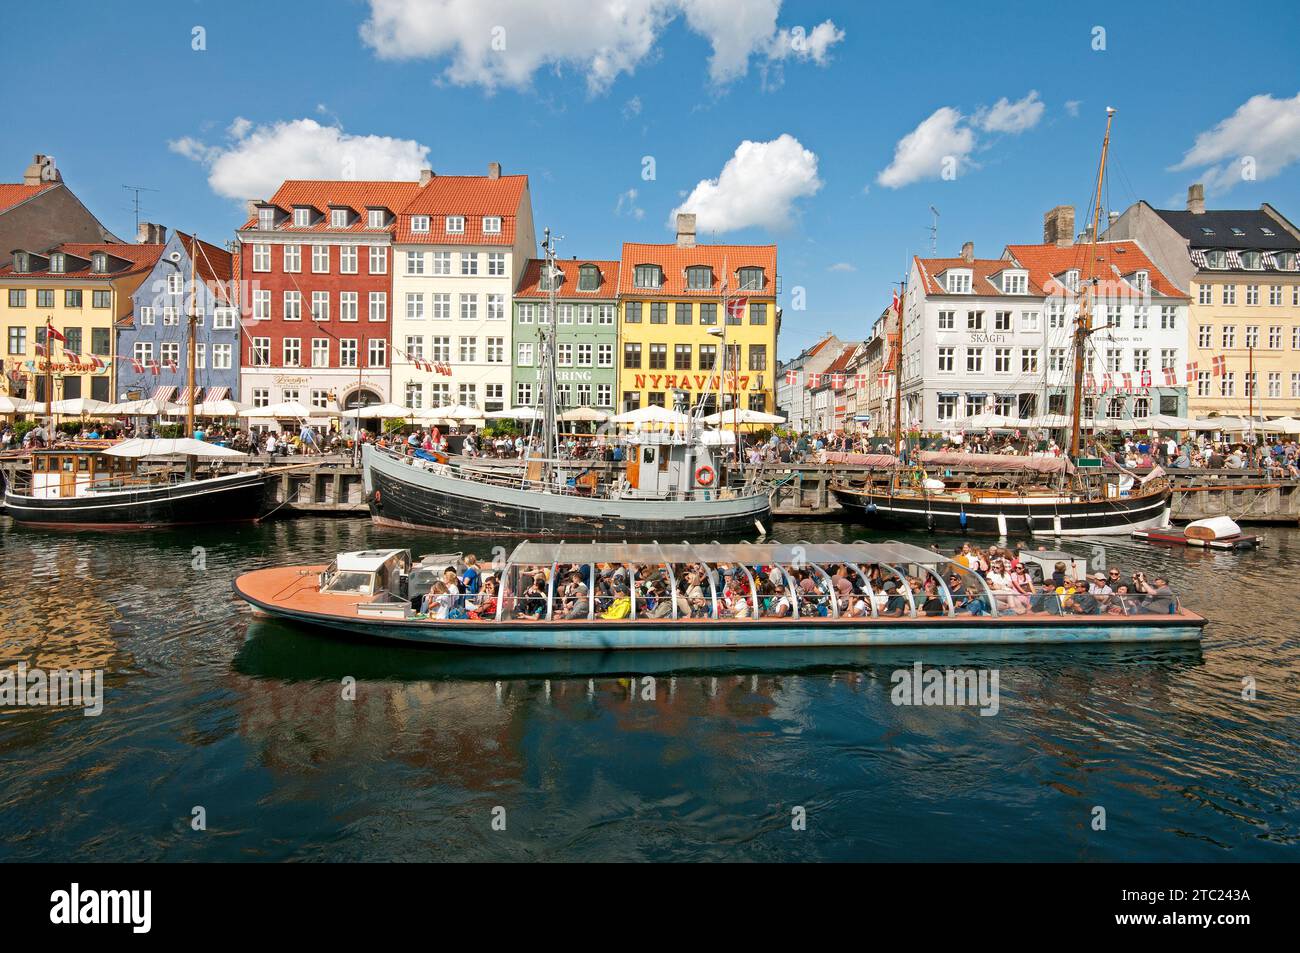 Sightseeing boat tour on the Nyhavn canal, Copenhagen, Denmark Stock Photo